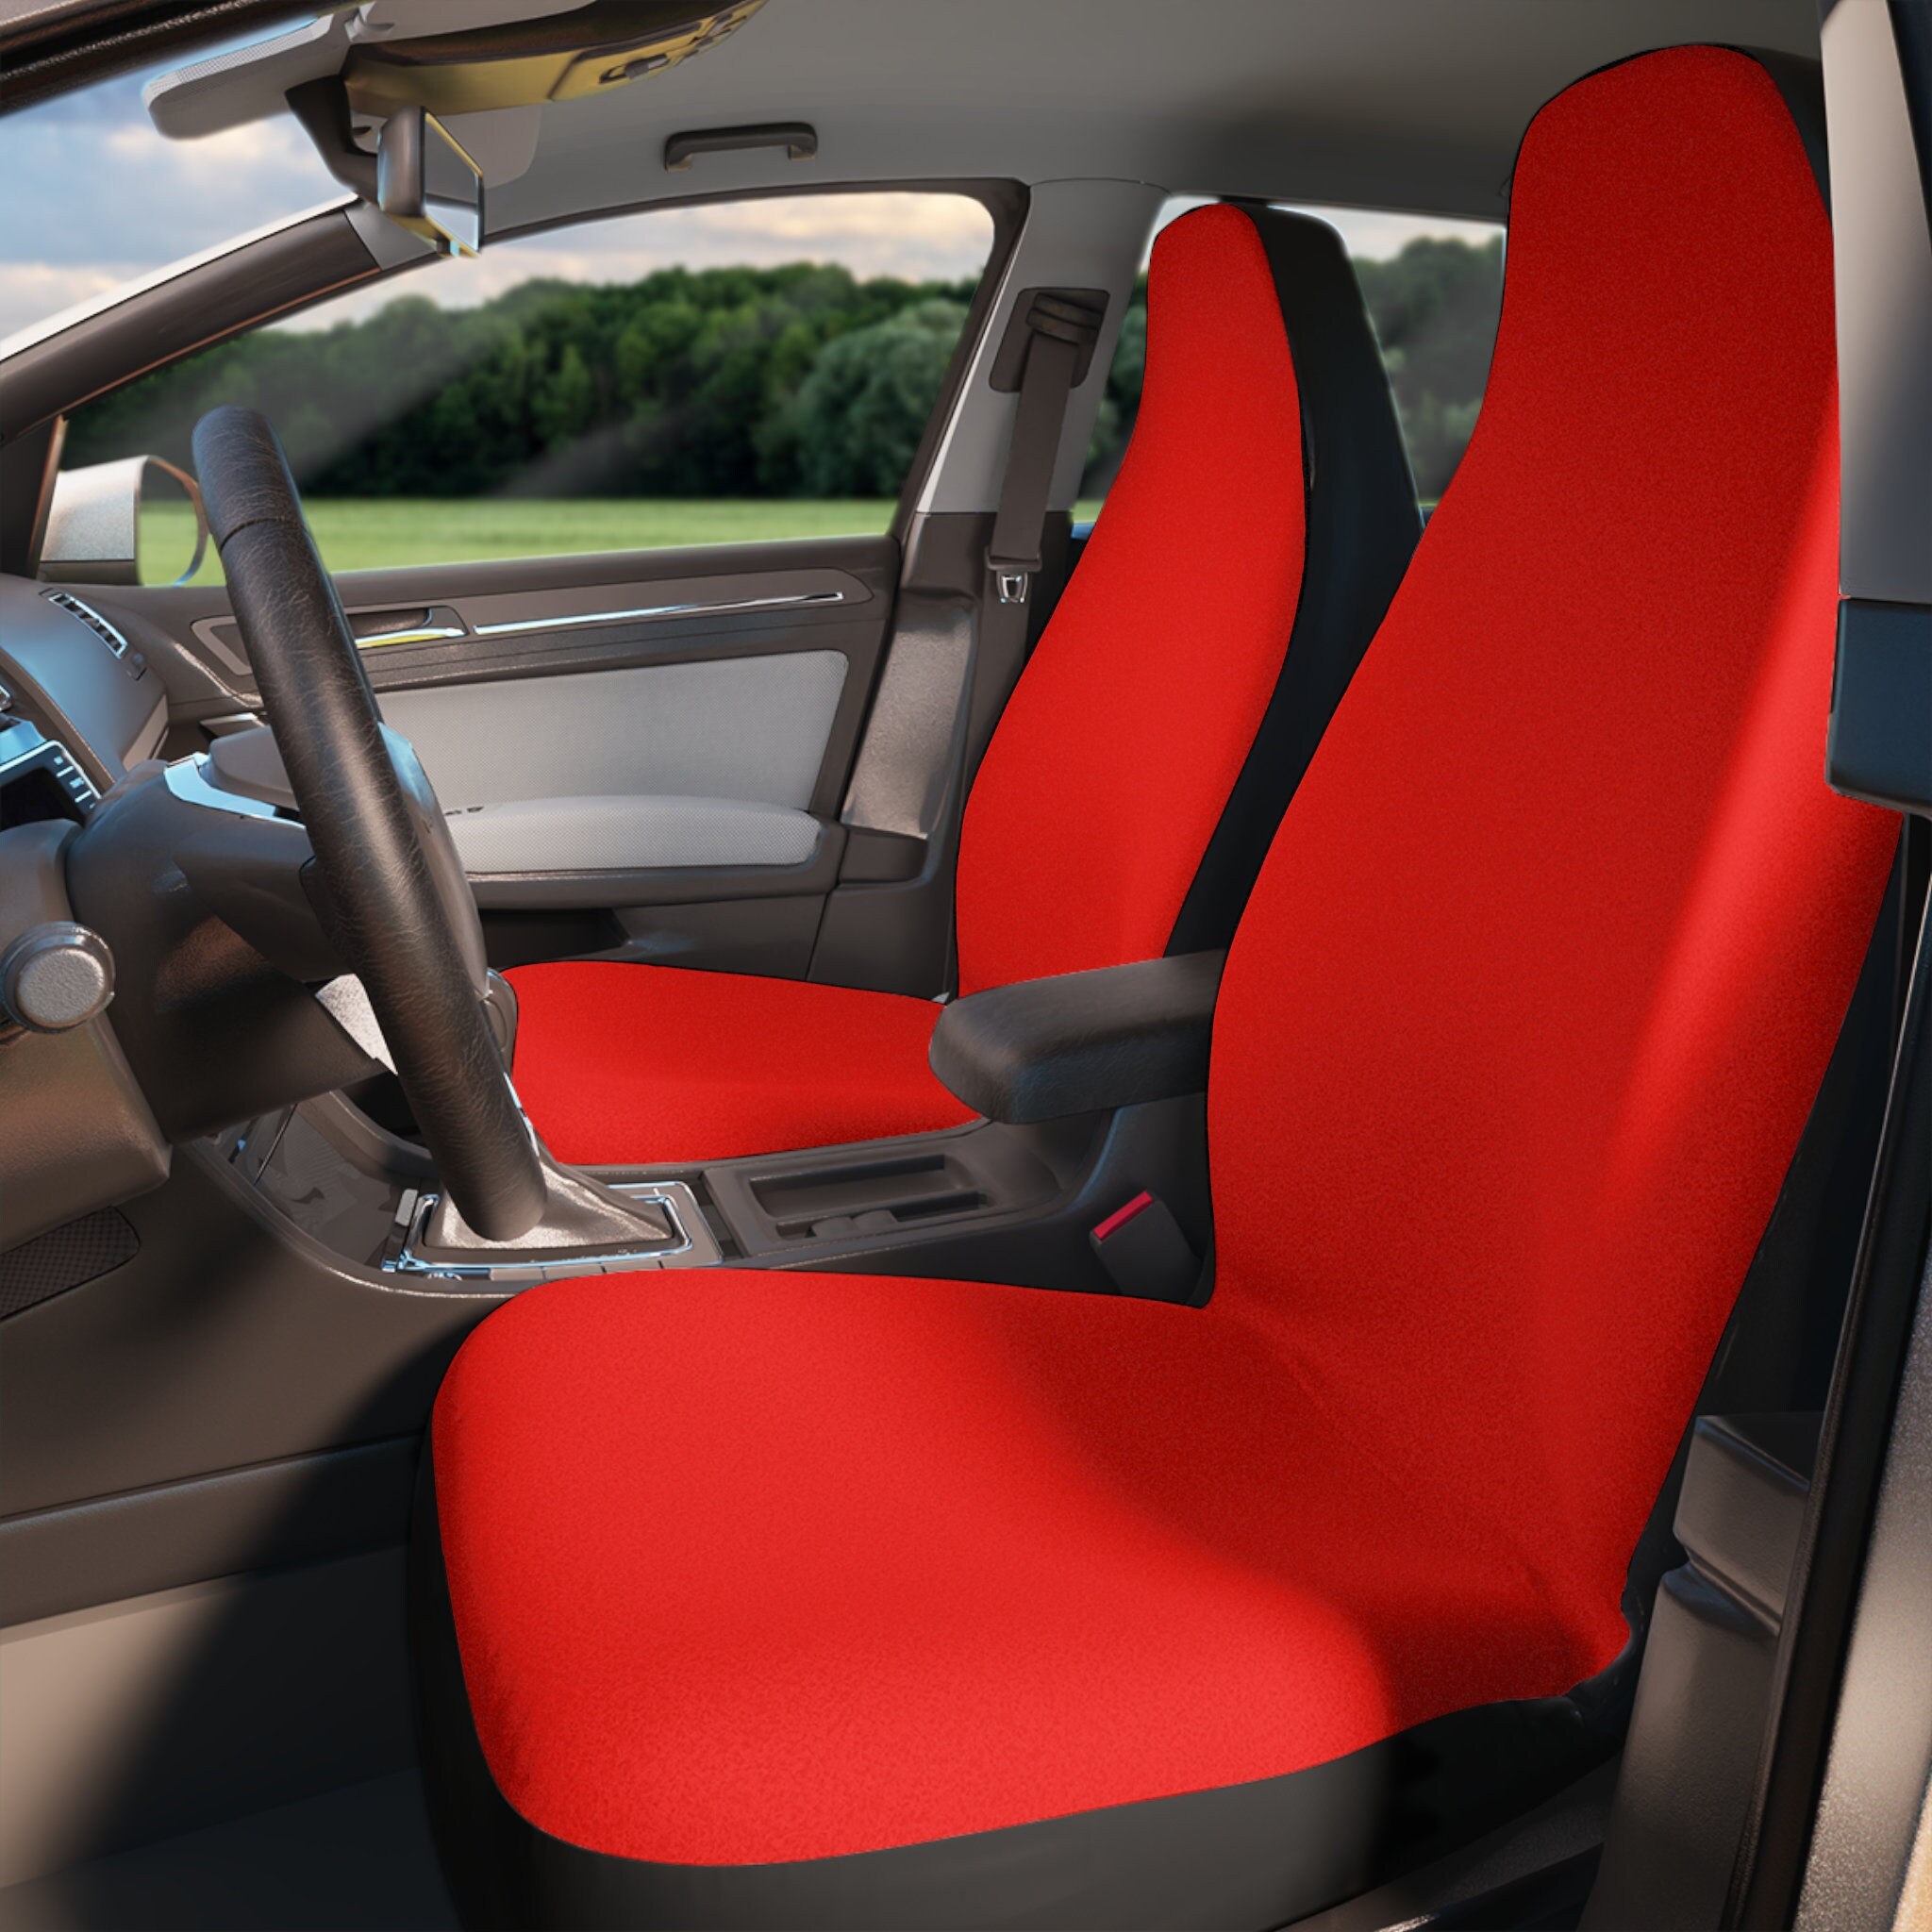 Red car seat cover - .de